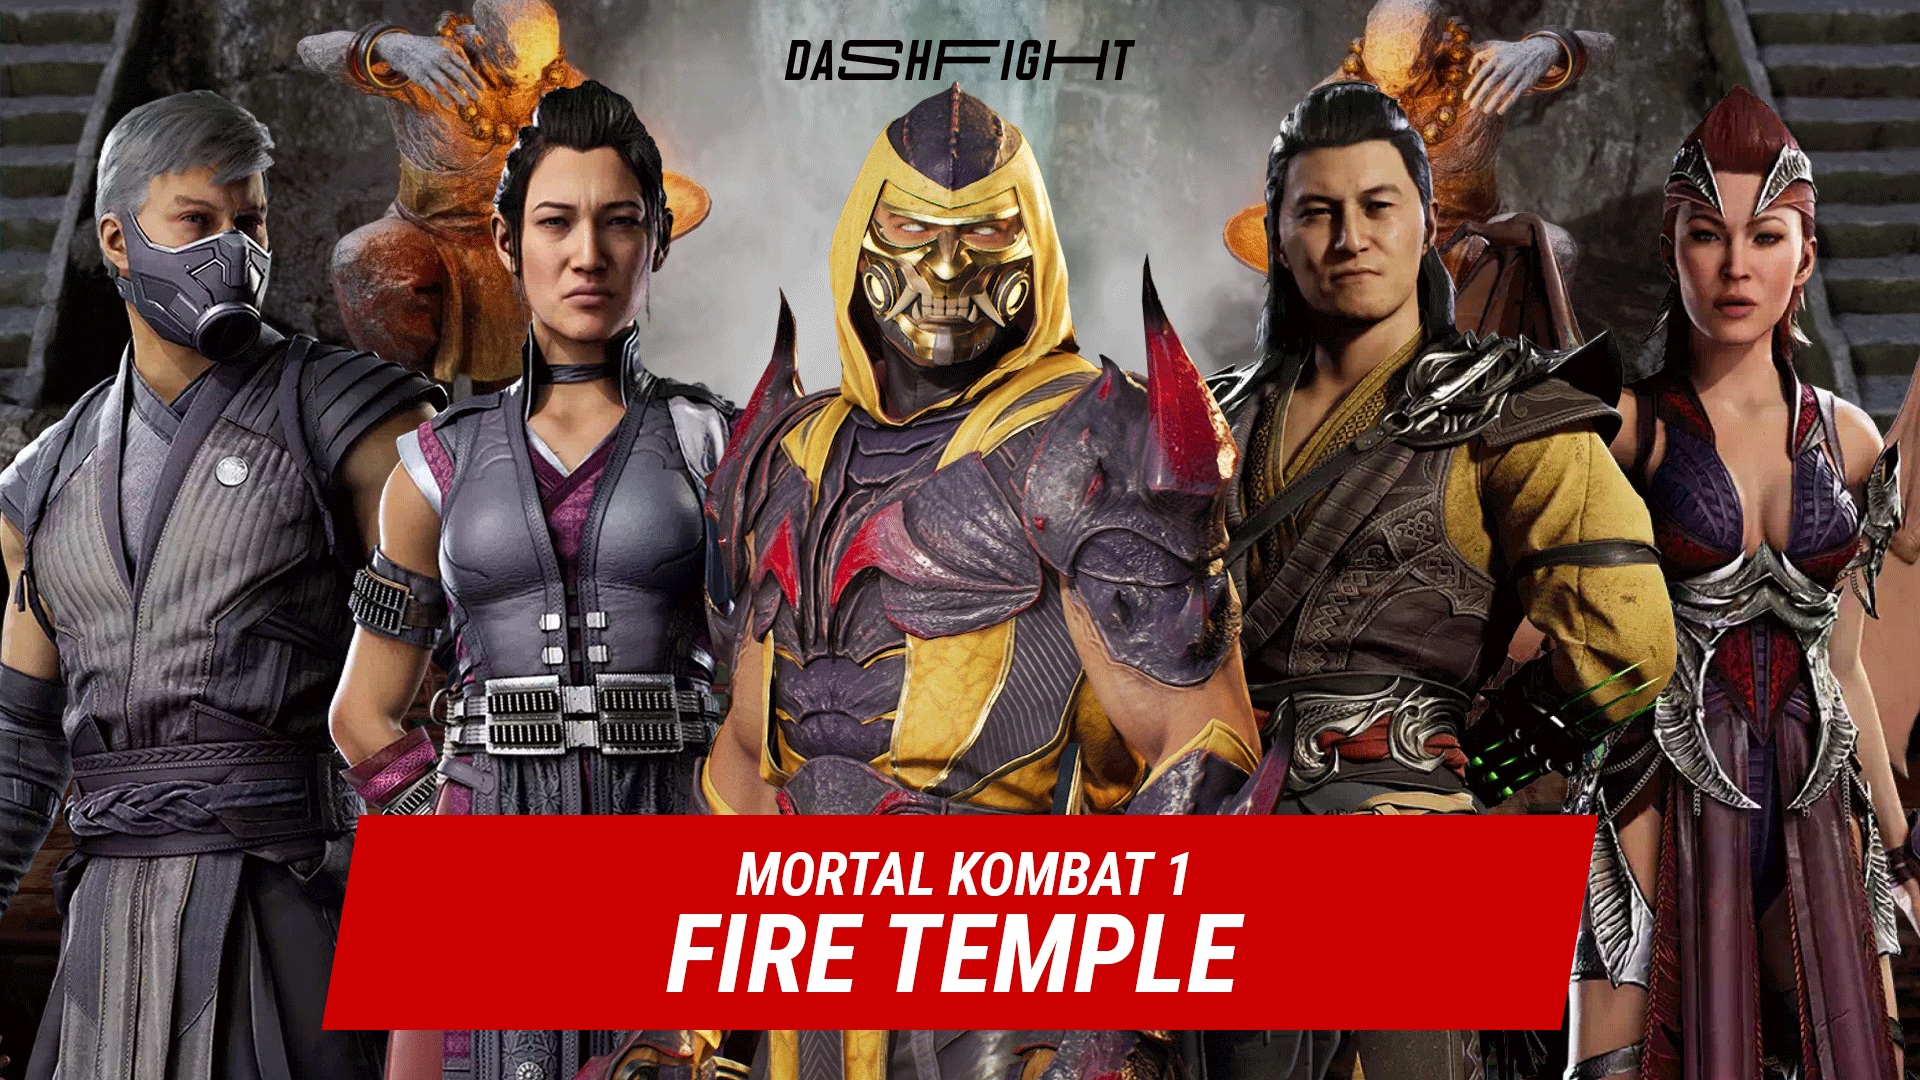 Mortal Kombat 1 - Invasions "The Spectre" Fire Temple Mesa Guide